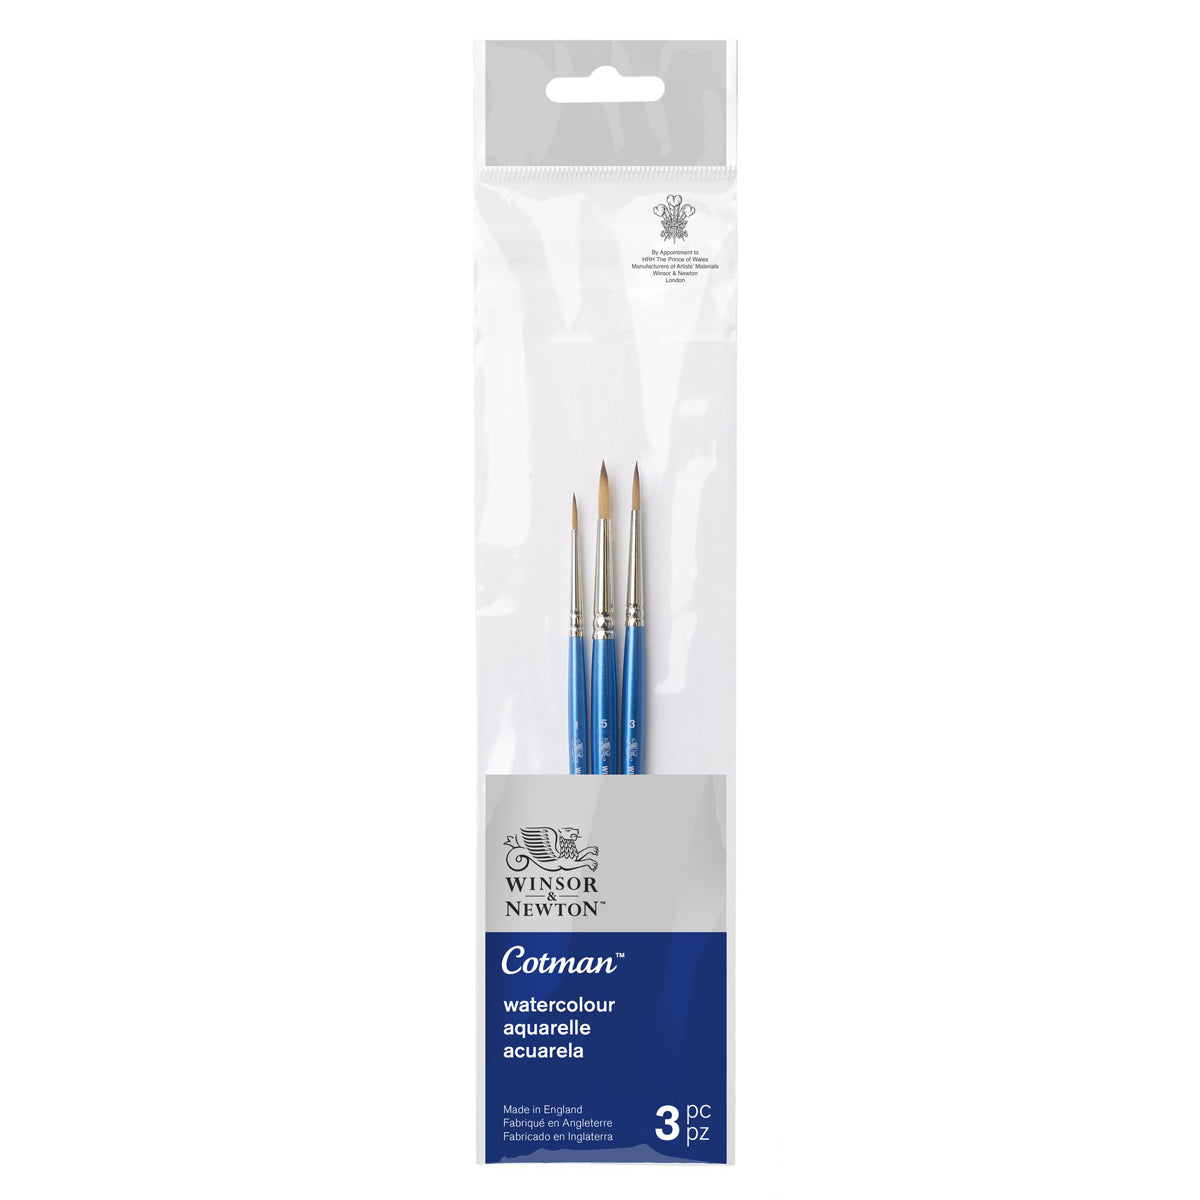 Winsor & Newton - Cotman Watercolour Short Handle Set No1 - 3x Brushes